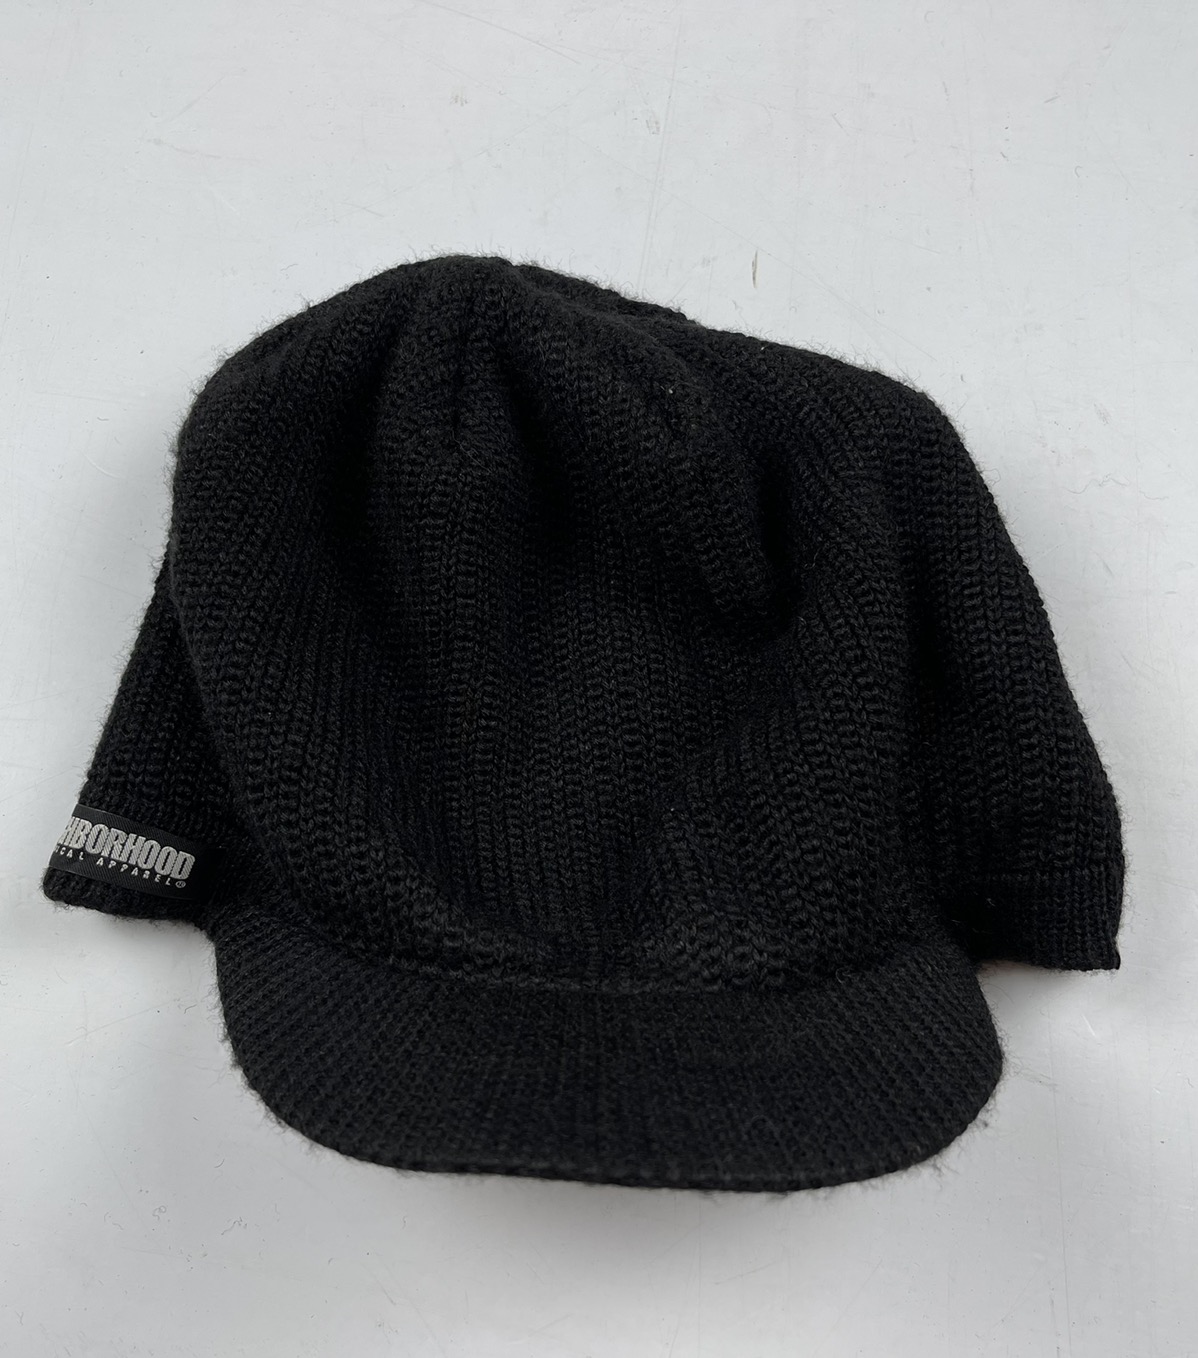 neighbourhood hat beanie hat snow cap wool hat - 5